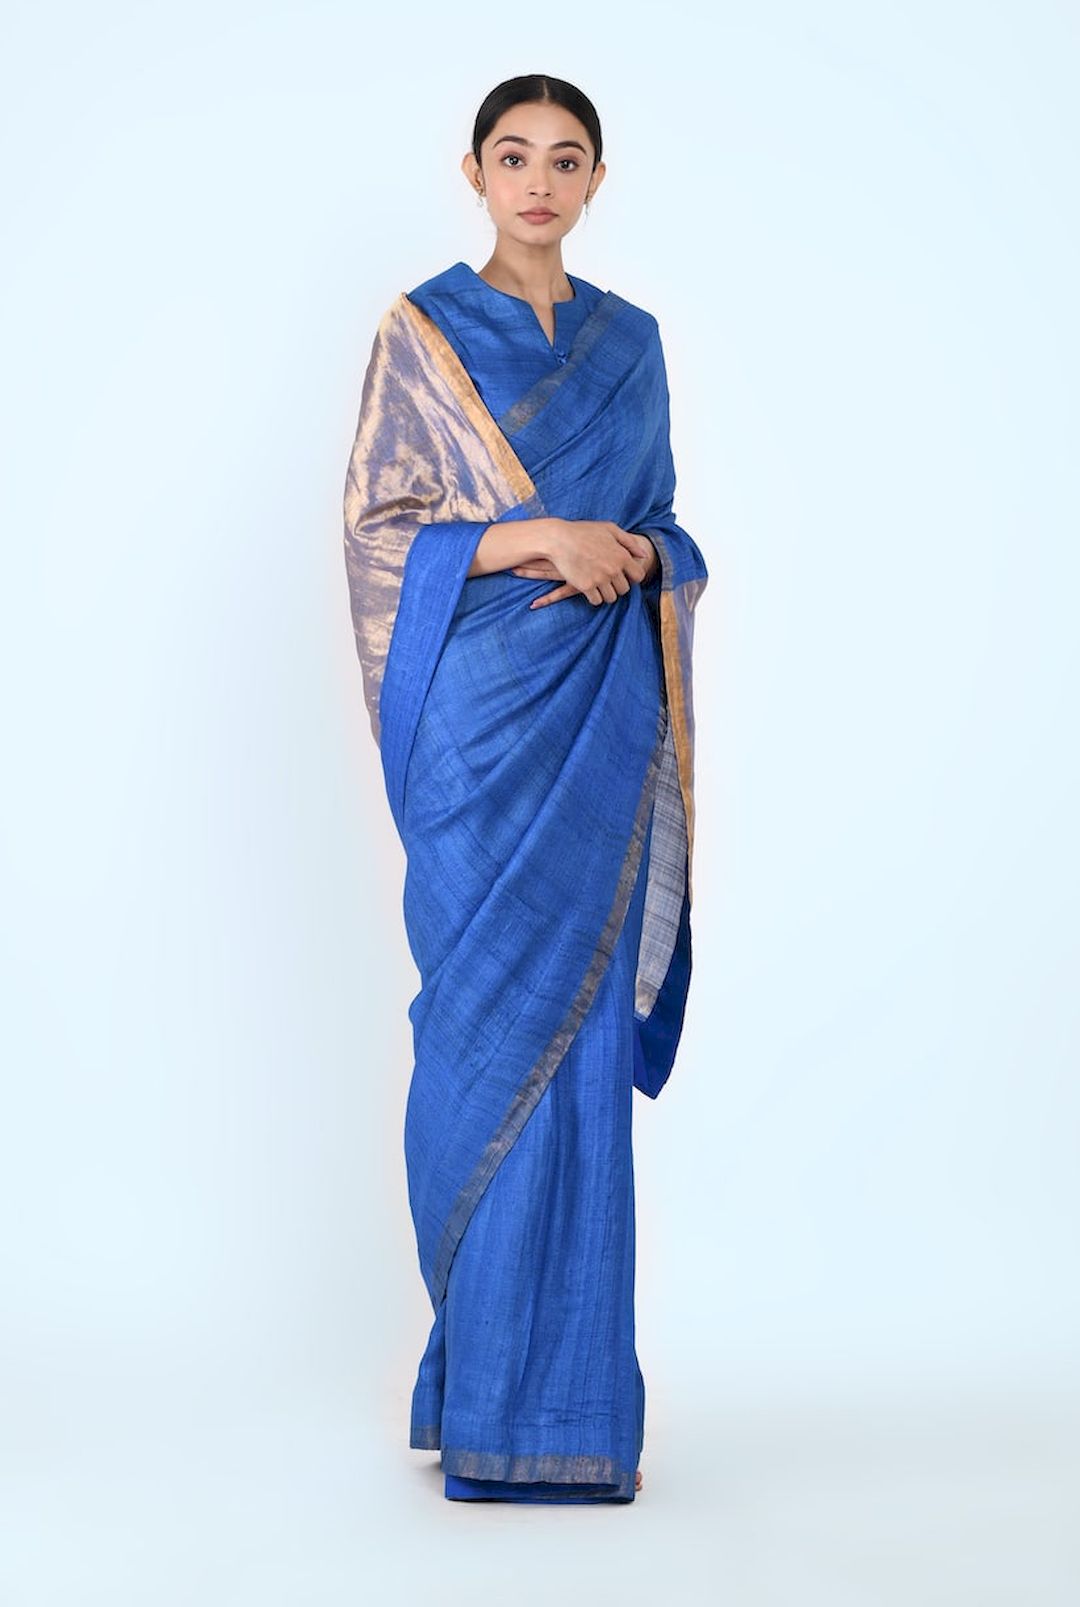 Tussar Silk Sari With Blouse (Royal Blue) - Prashant Chouhan